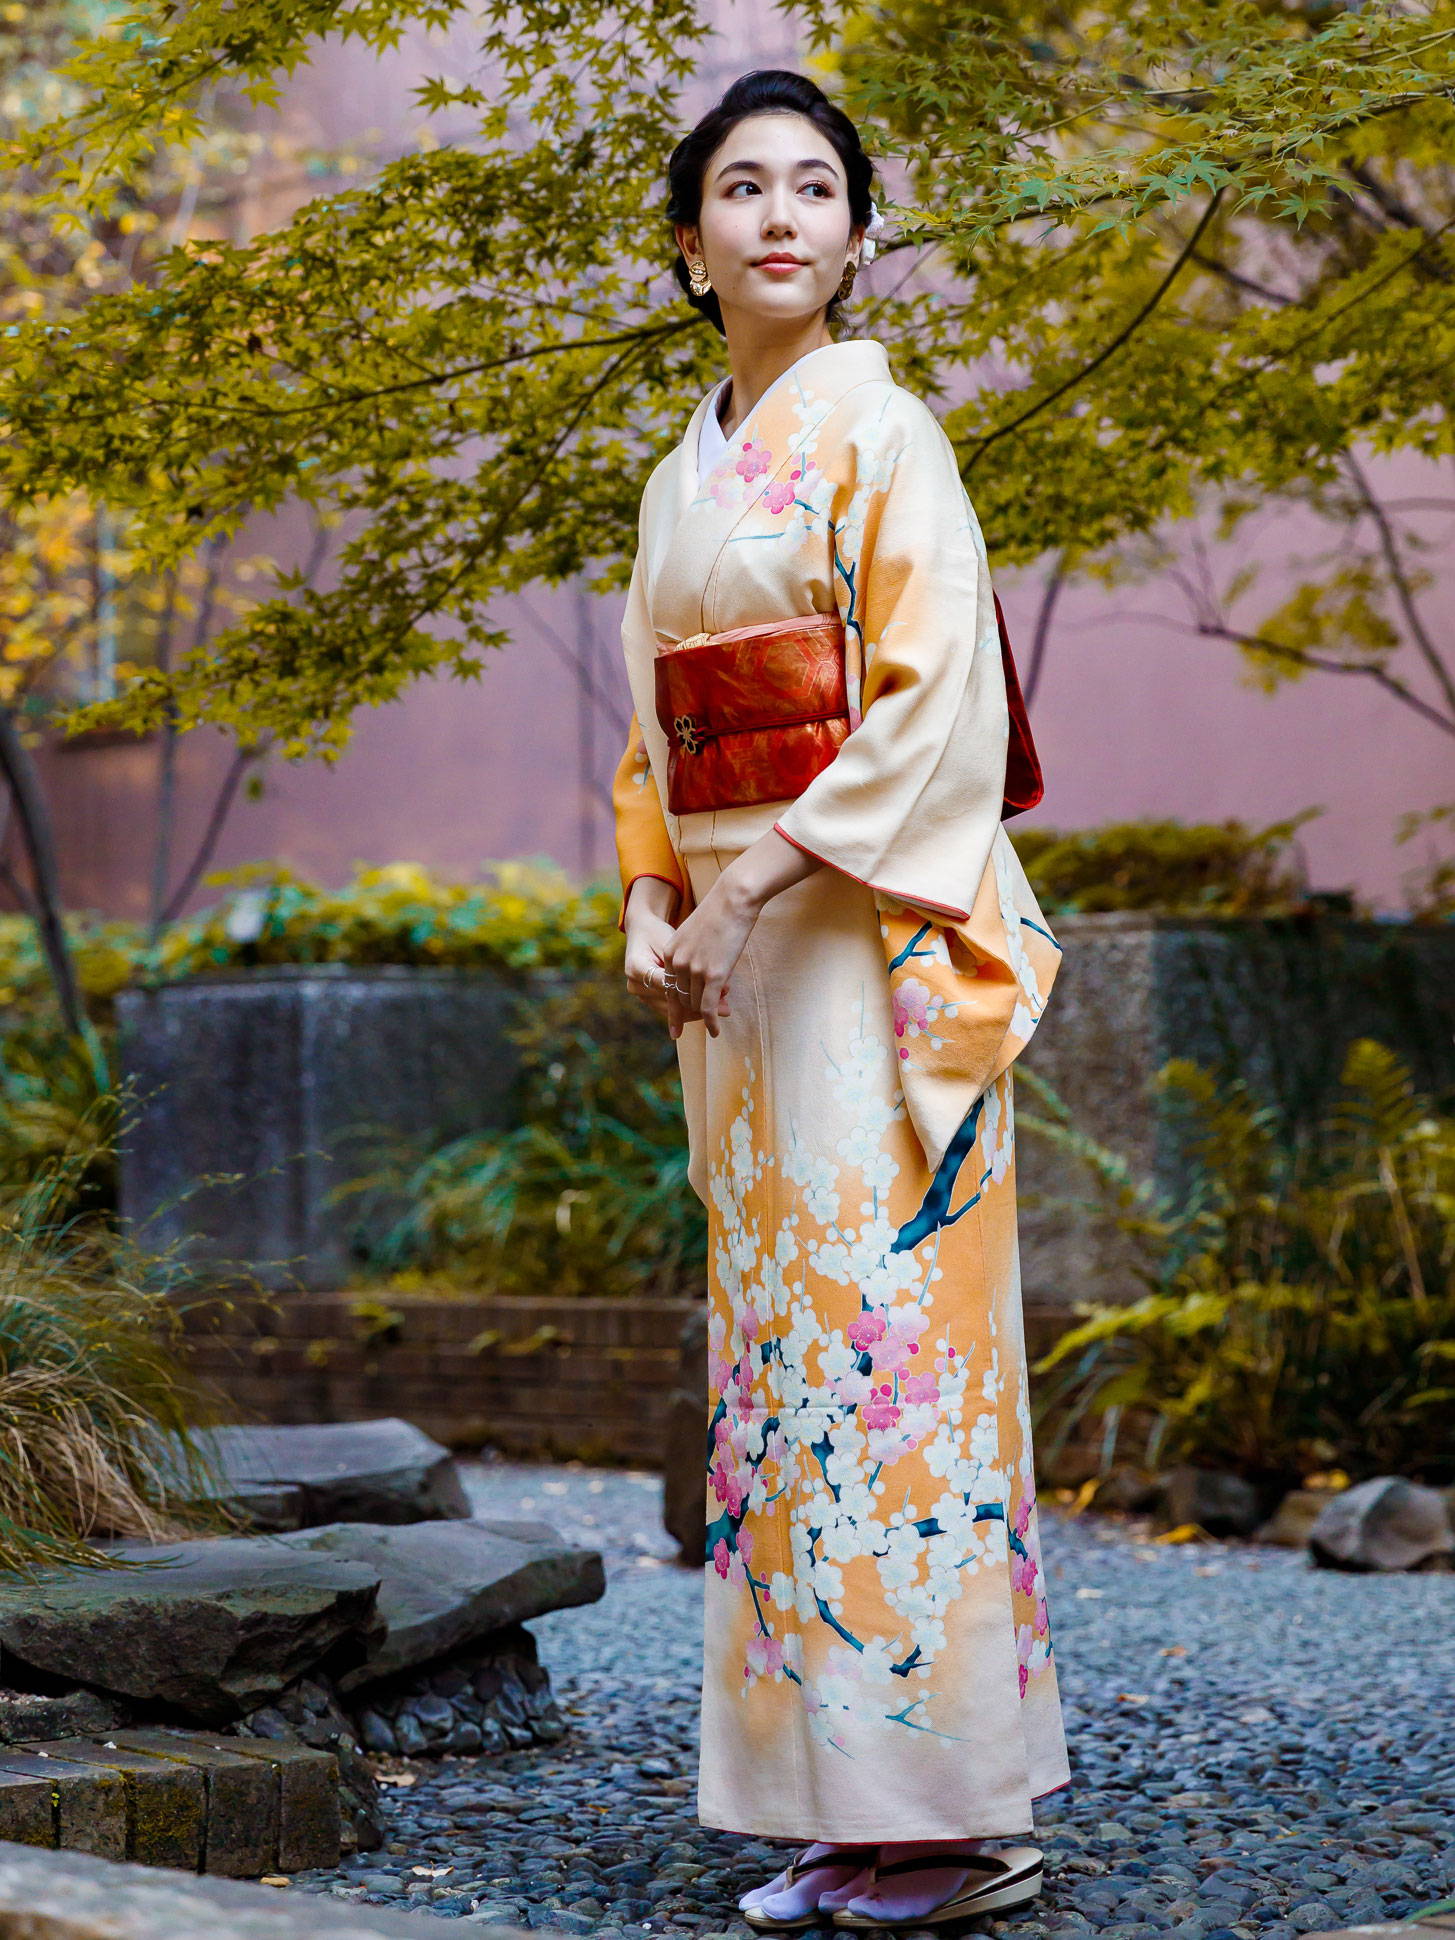 Kimono definition